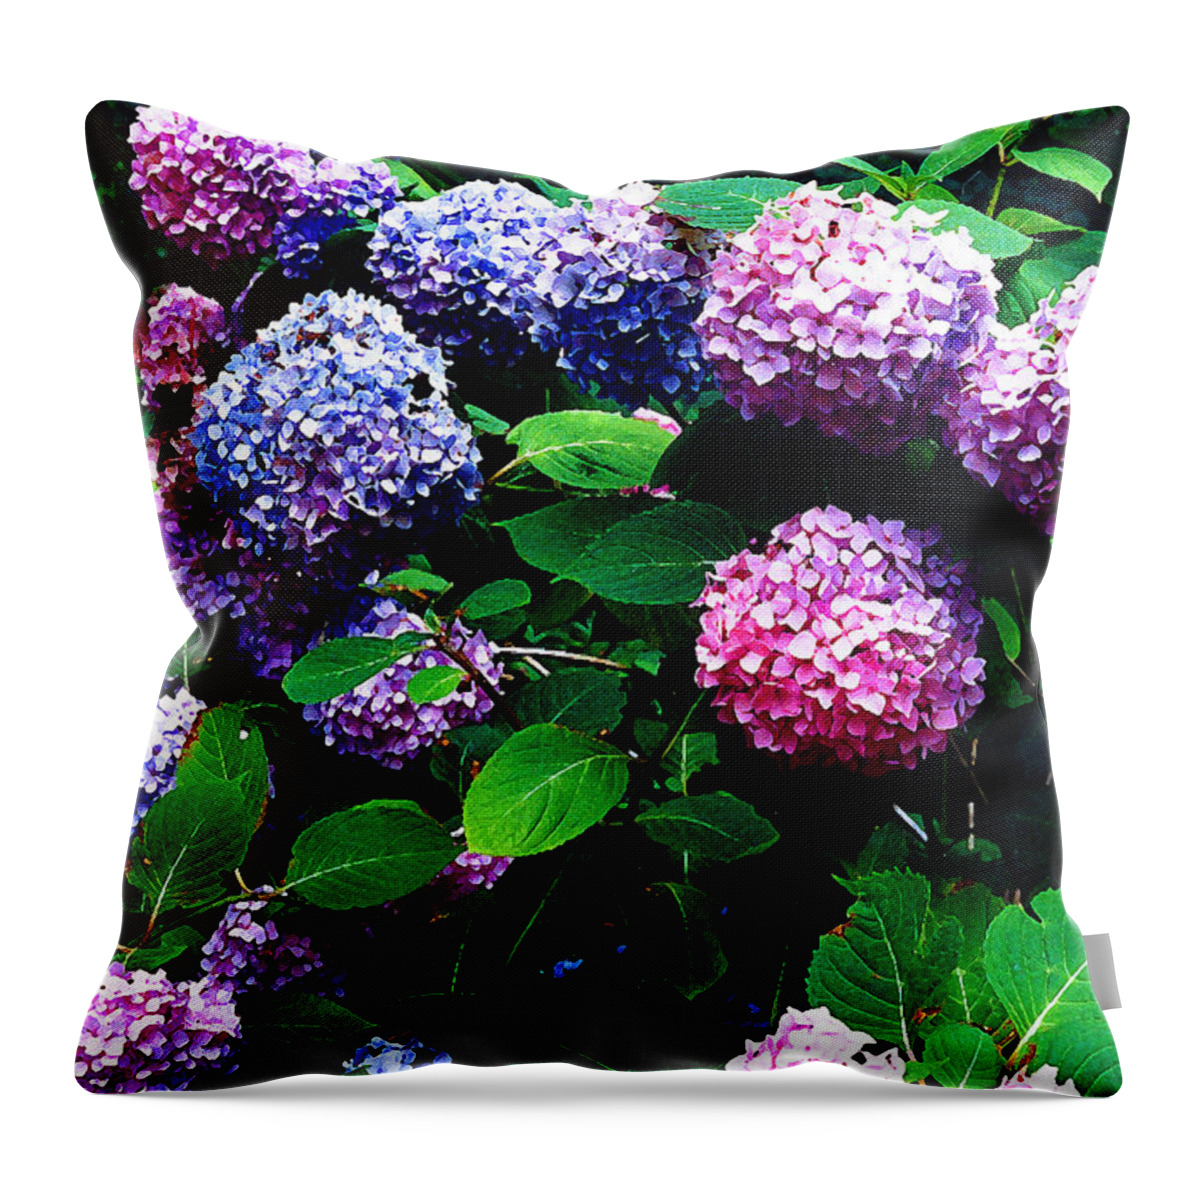 Flowers Throw Pillow featuring the photograph Hydrangeas by Nancy Mueller